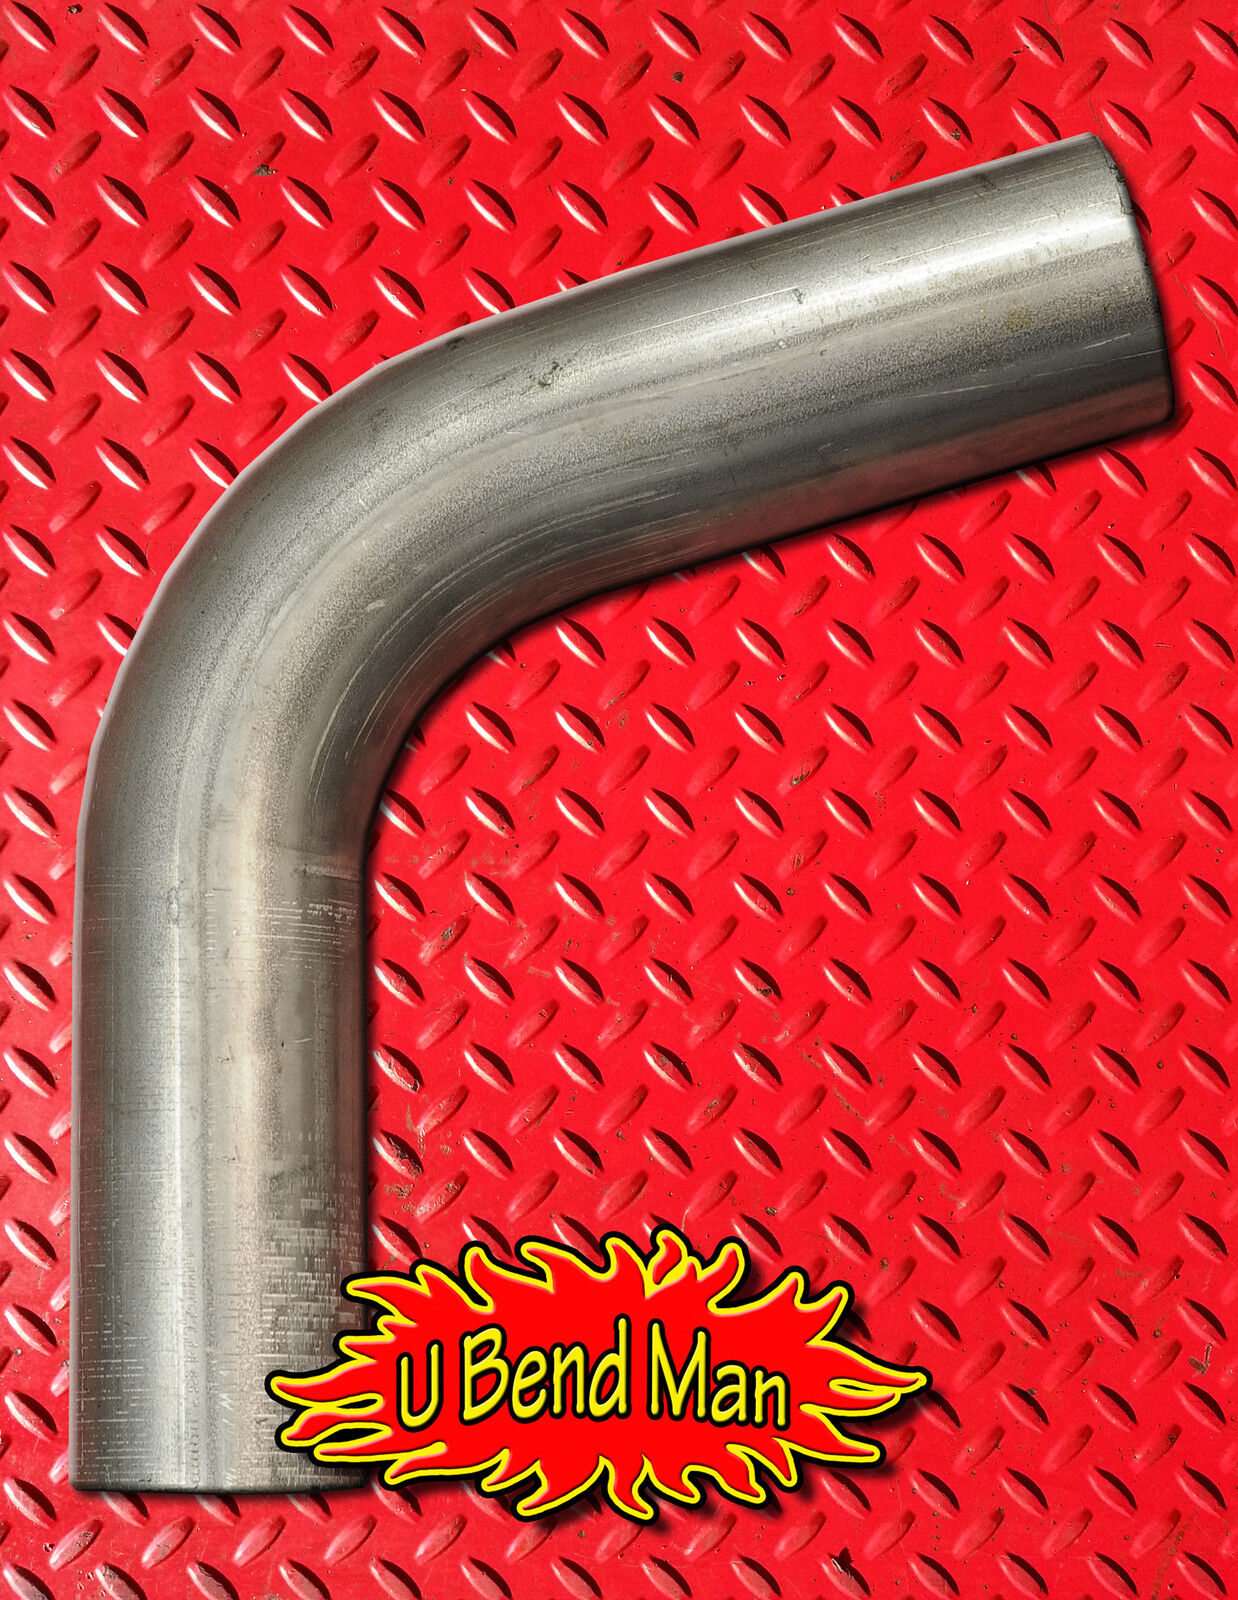 75 degree 2.25 inch Mandrel Bend exhaust pipe custom DIY Turbo downpipe muffler